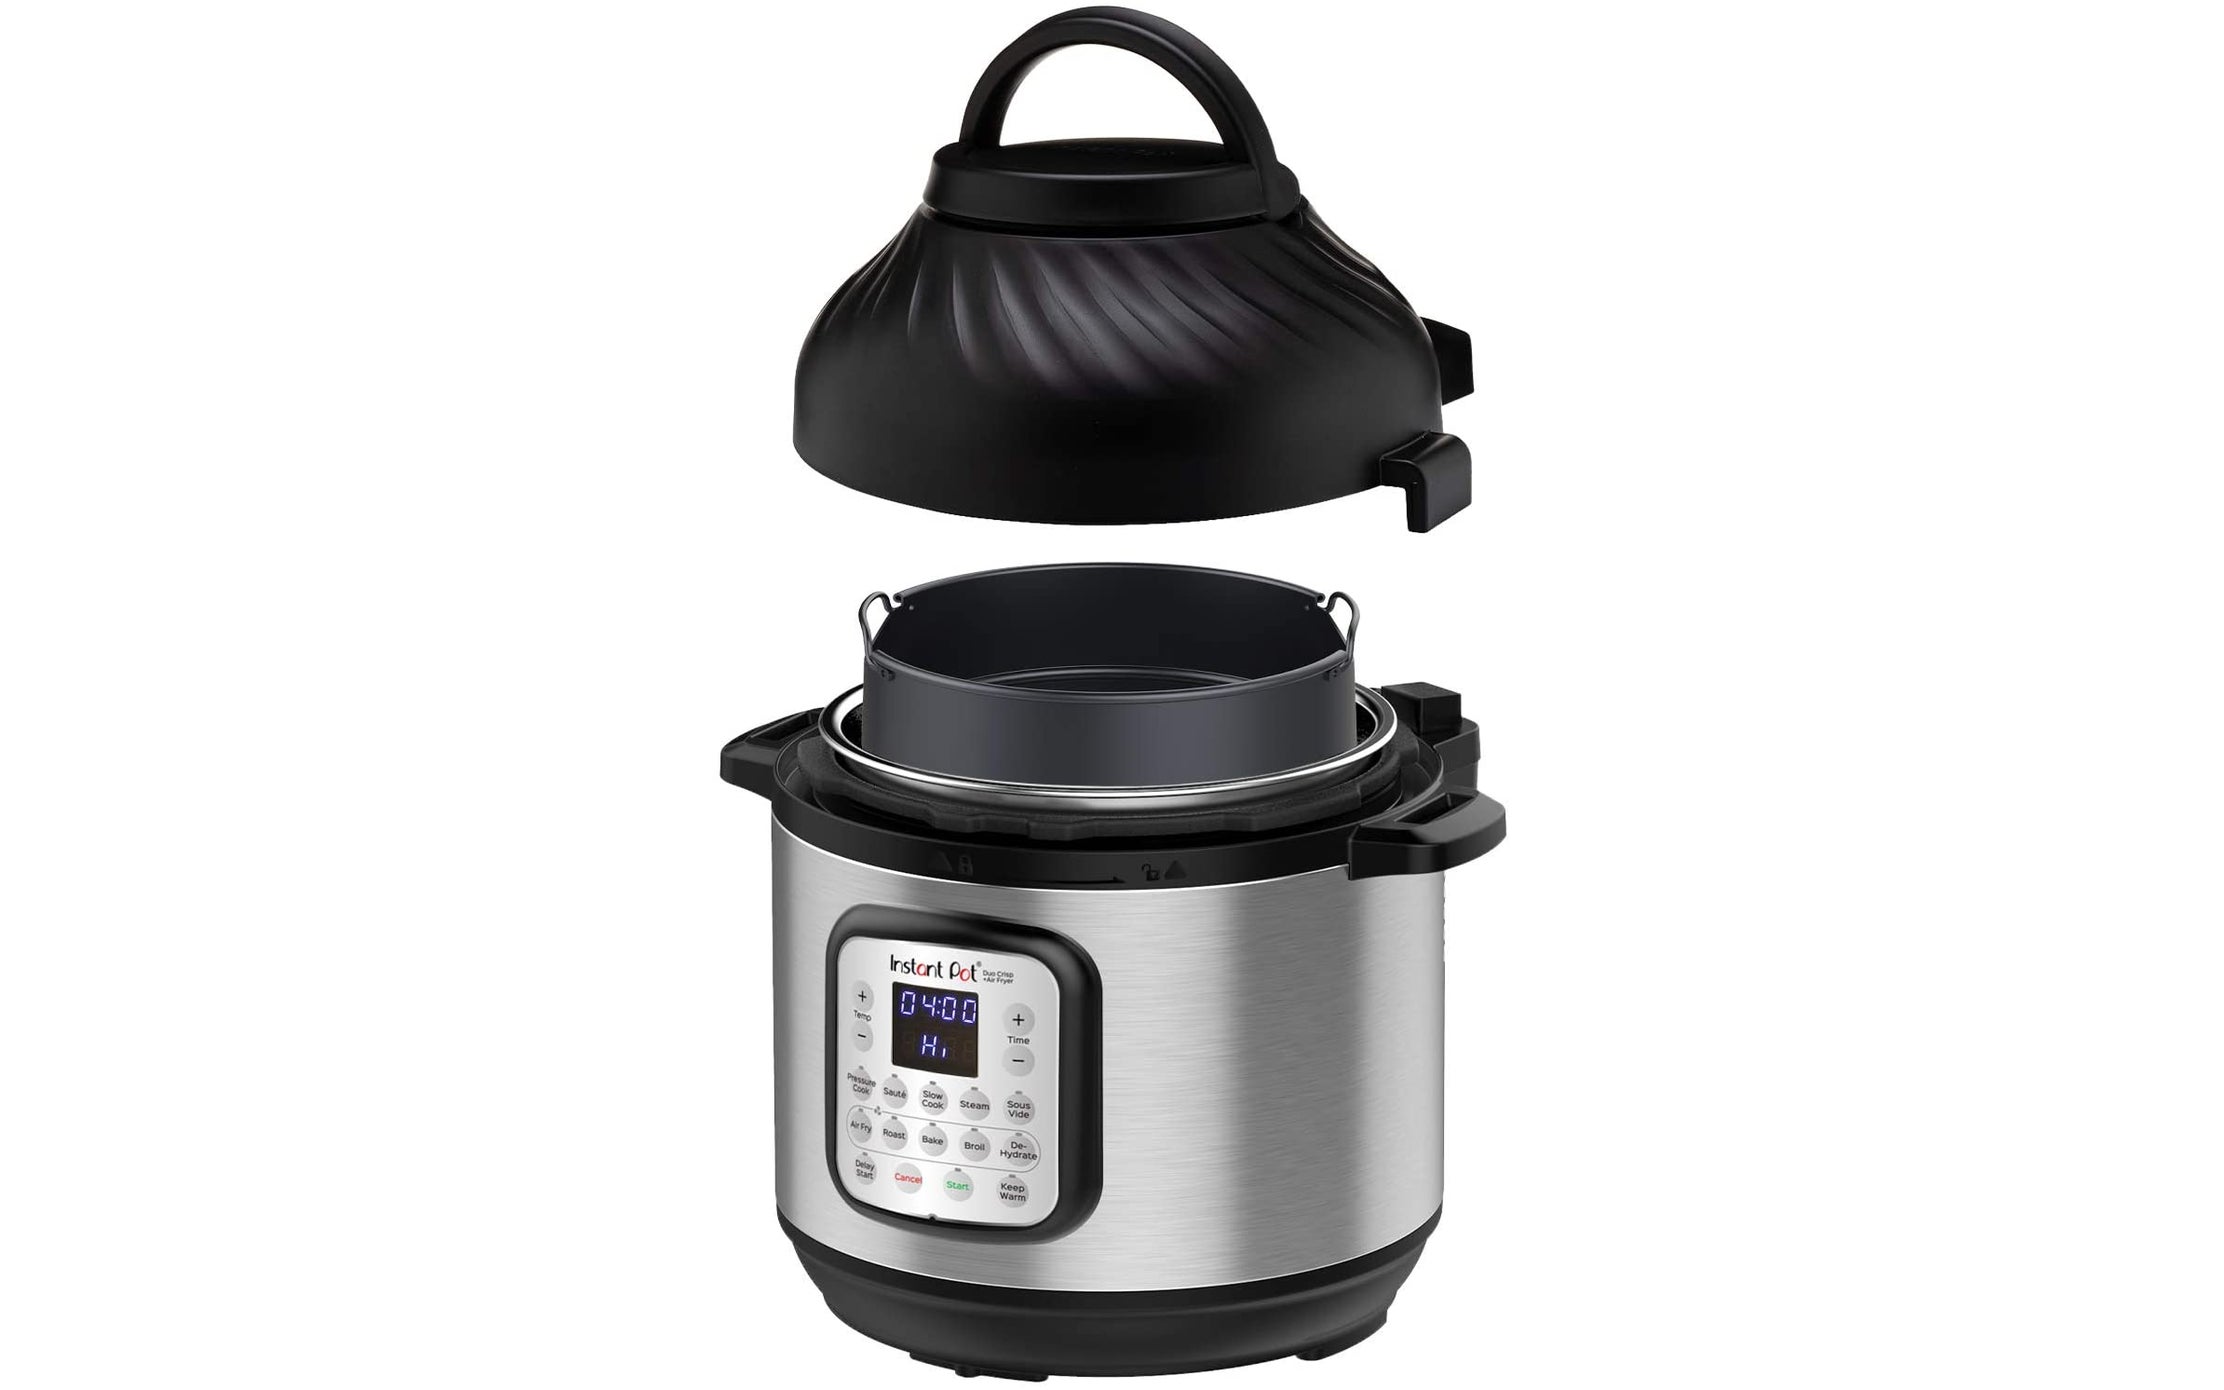 Instant pot duo crisp pressure cooker